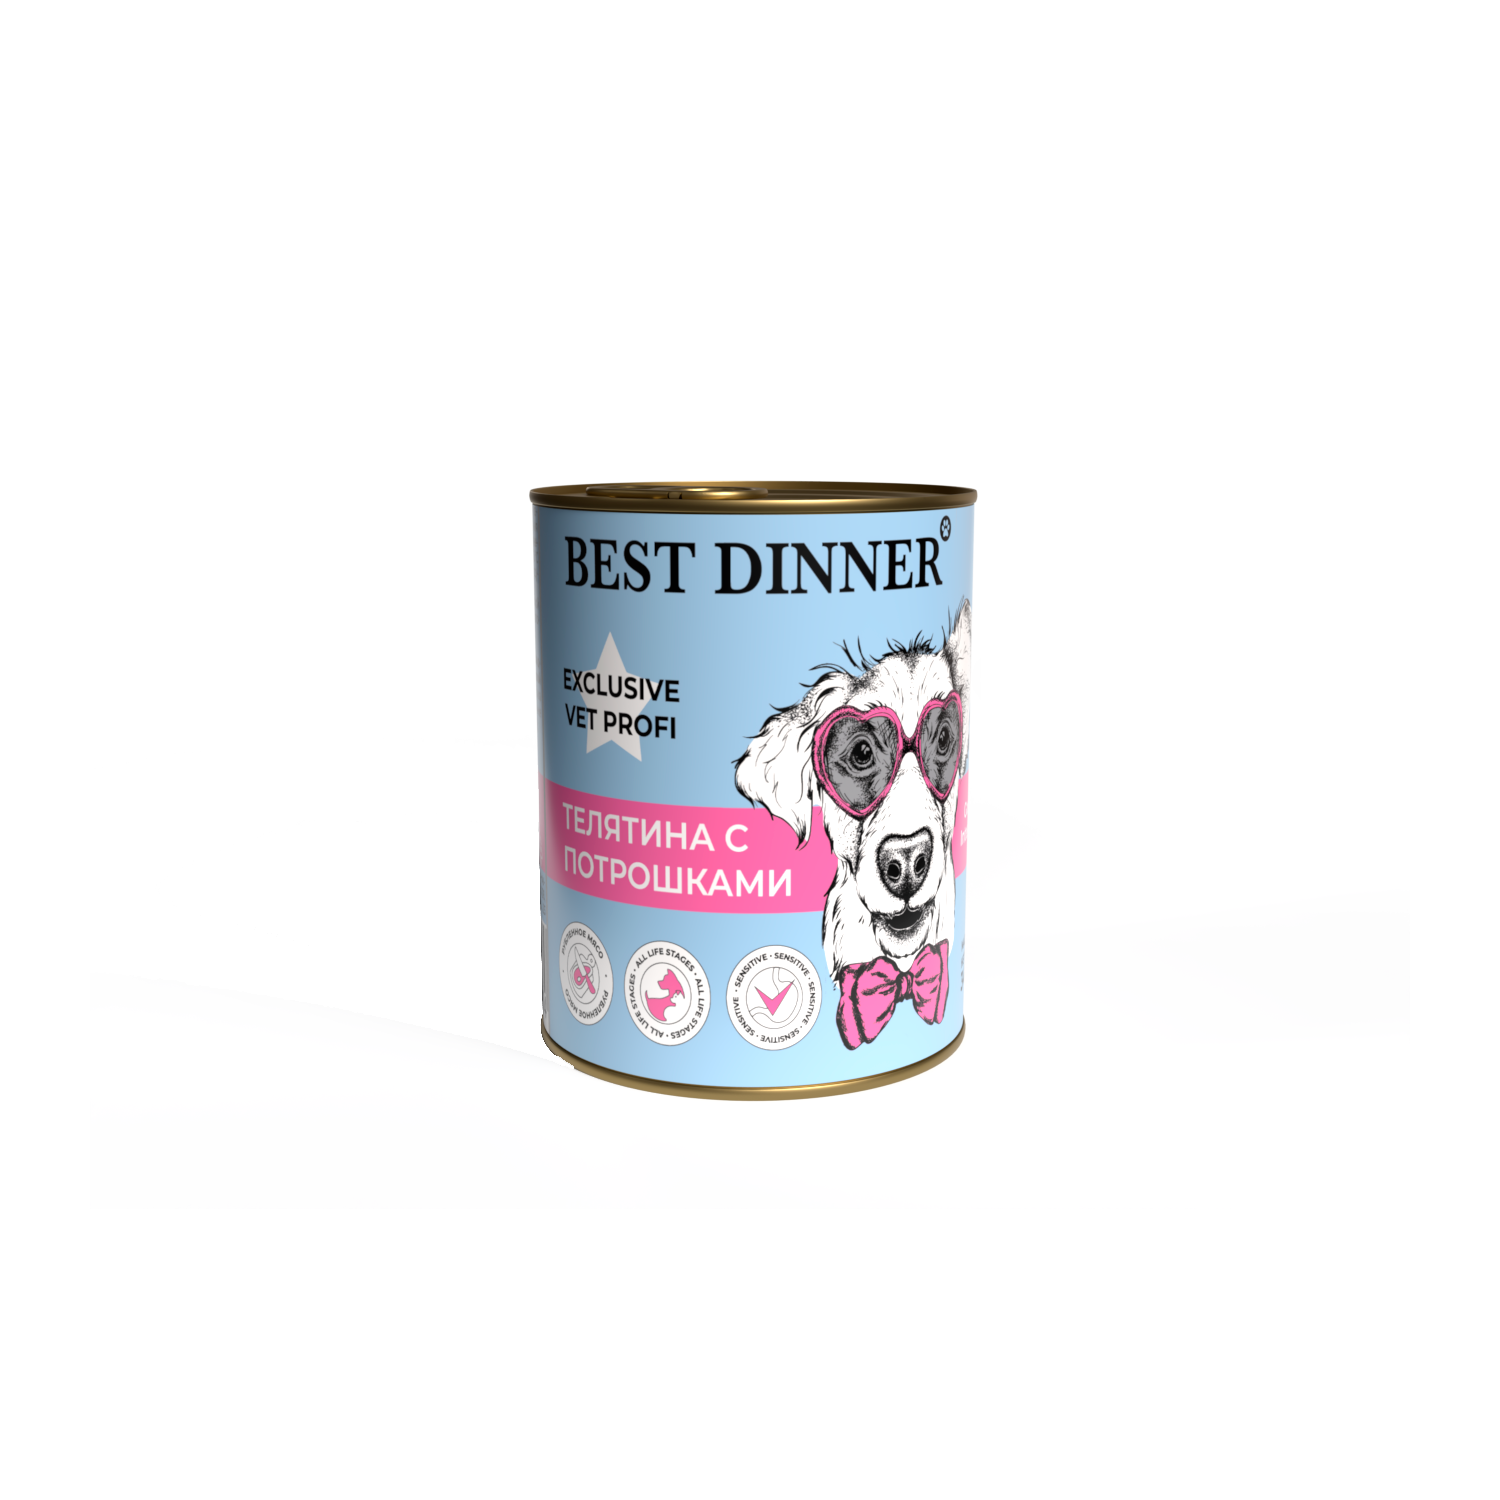 Корм для собак Best Dinner 0.34кг Exclusive Vet Profi Gastro Intestinal телятина с потрошками - фото 1